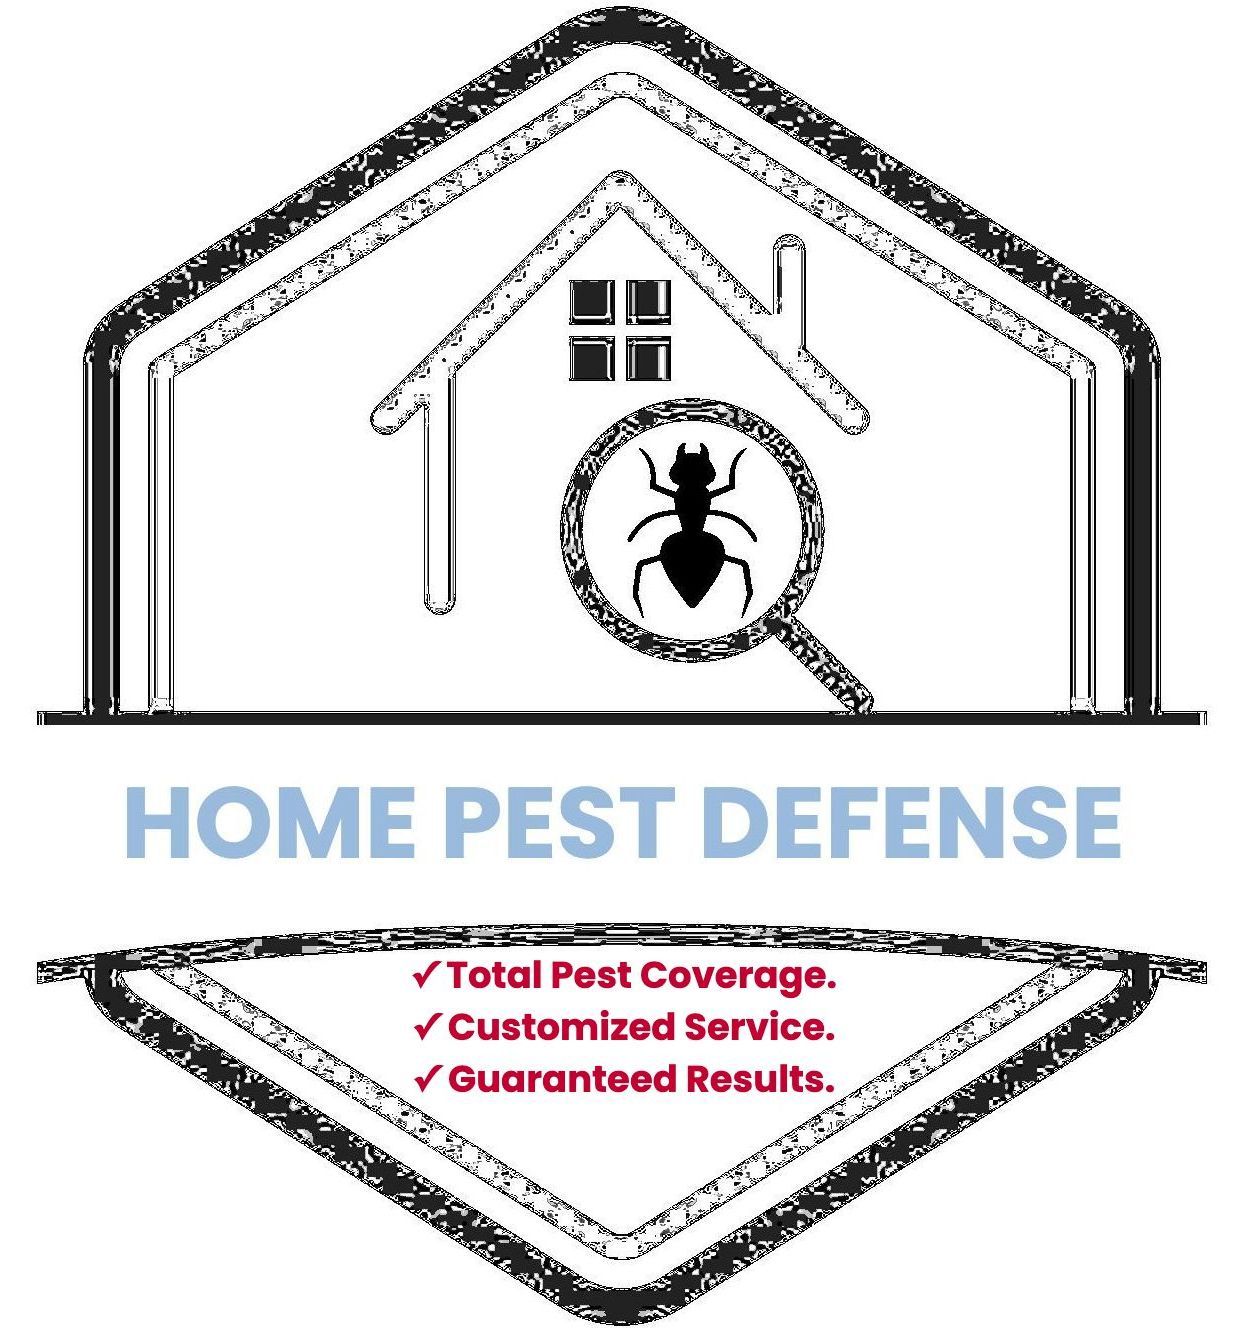 Home pest defense in Worcester, Massachusetts. 